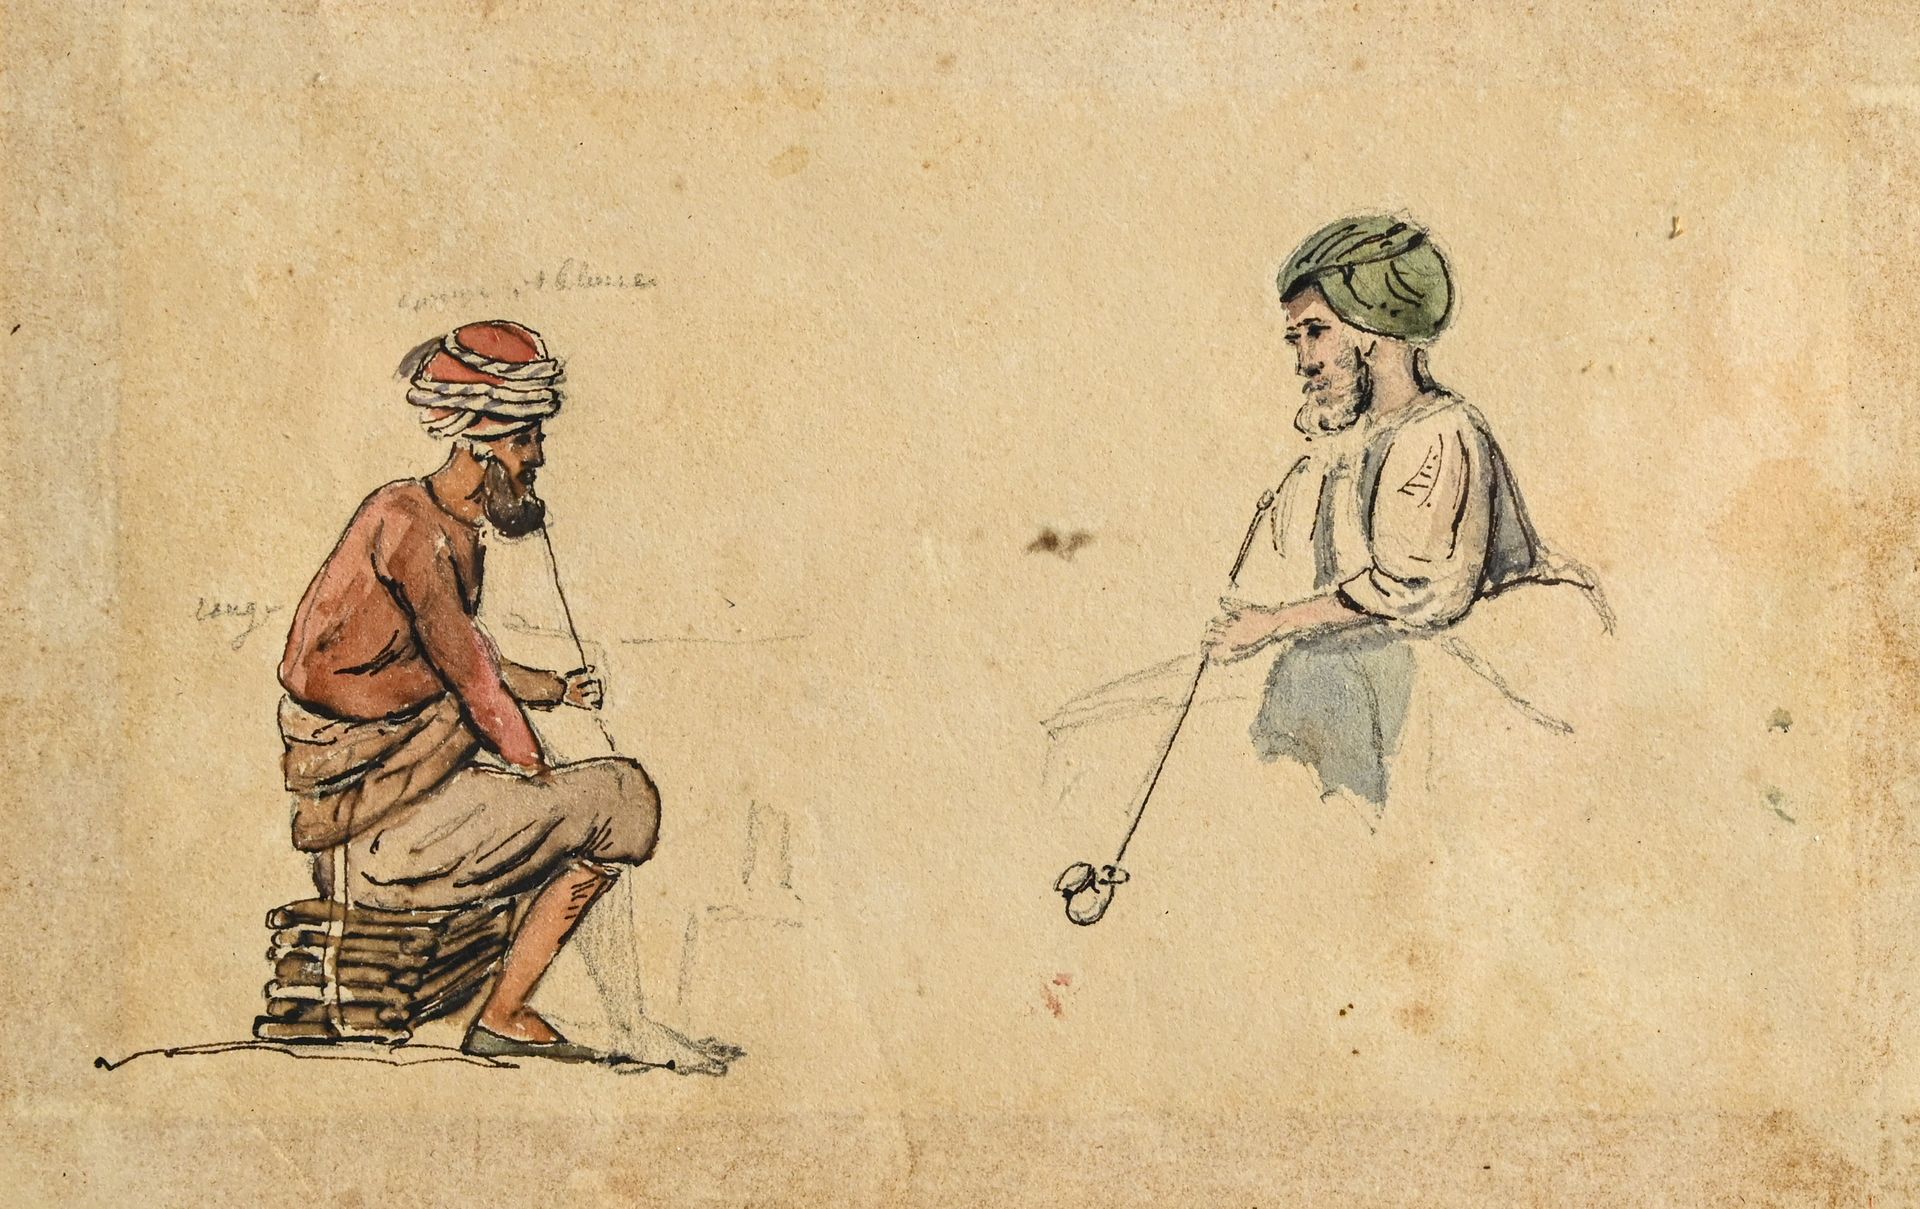 ANONYME 两个北非人物吸烟 部分水彩素描，有颜色指示。

H.12,5 cm - W. 18,5 cm at sight